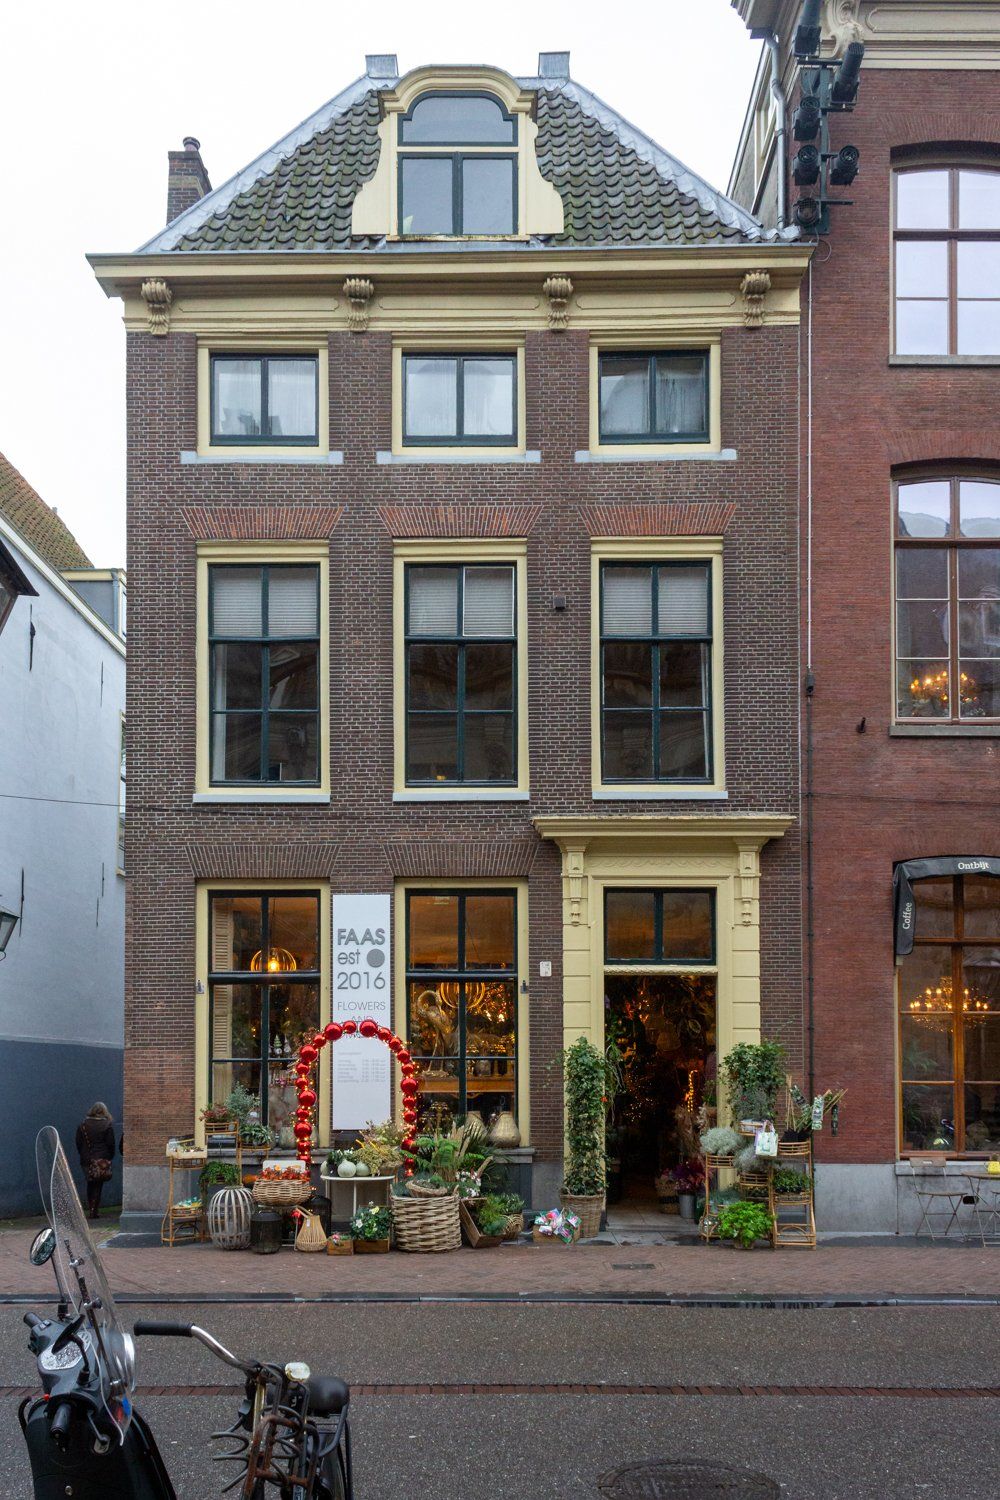 Faas est.2016 in Leiden